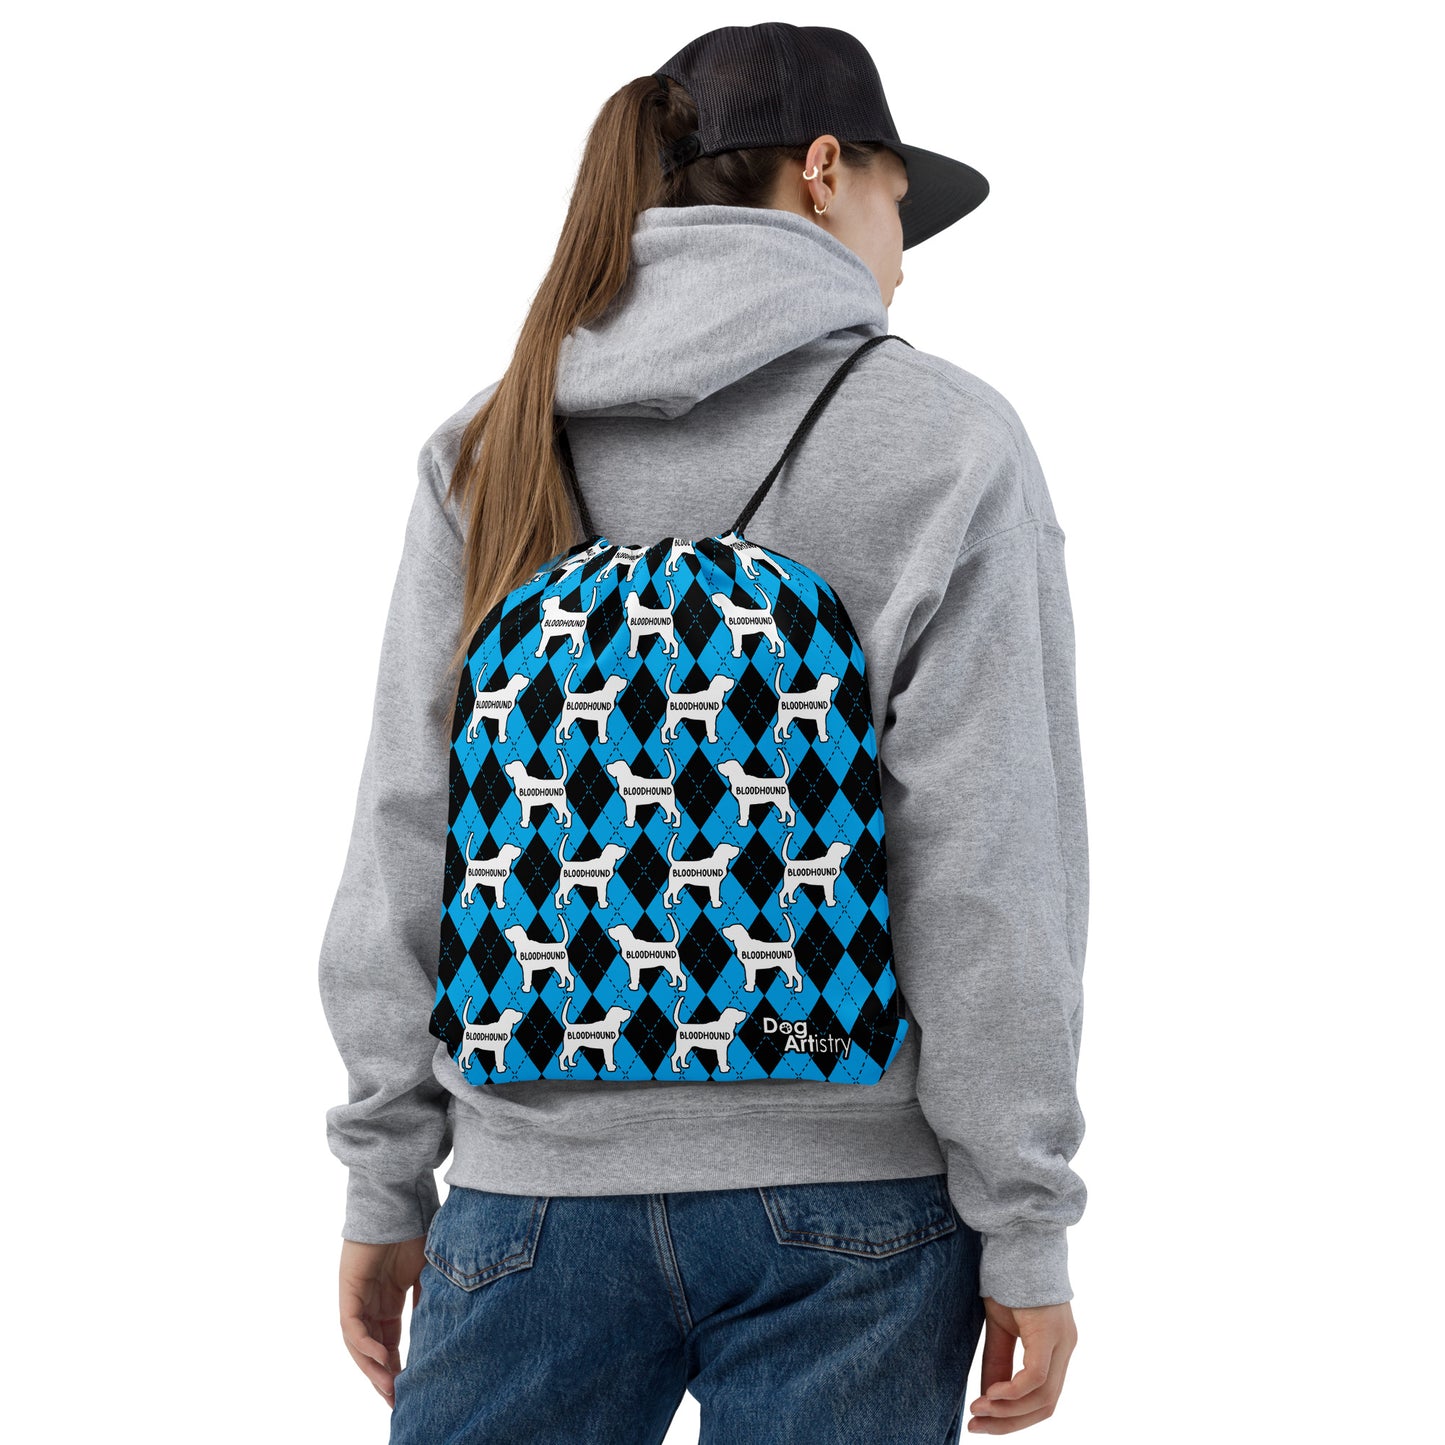 Bloodhound Argyle Blue and Black Drawstring bag